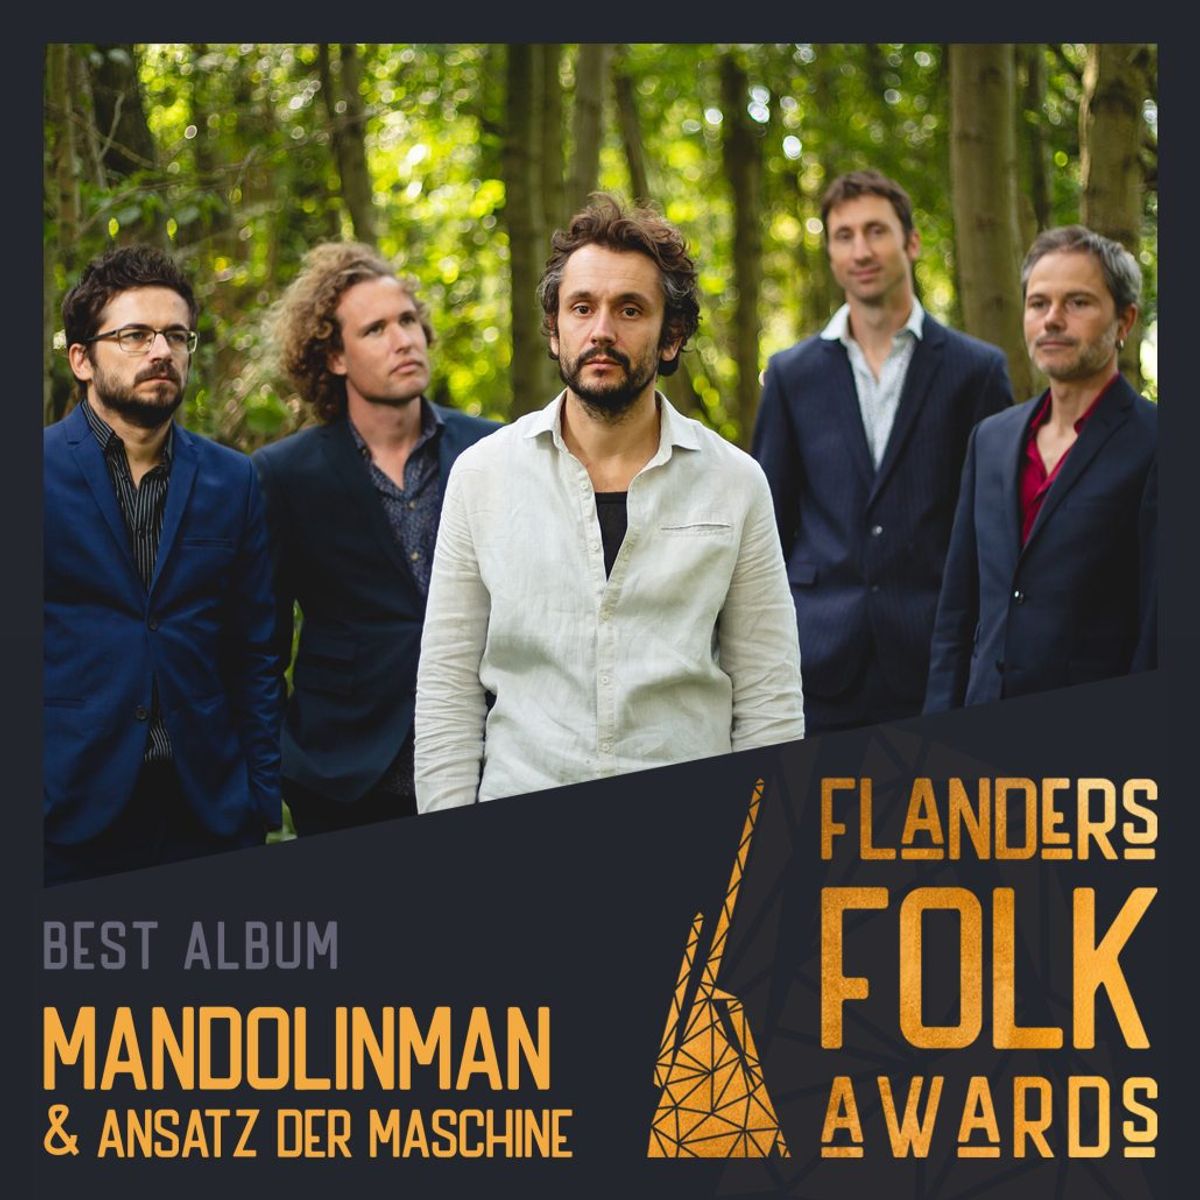 Flanders Folk Awards - Dik verdiende folkprijzen